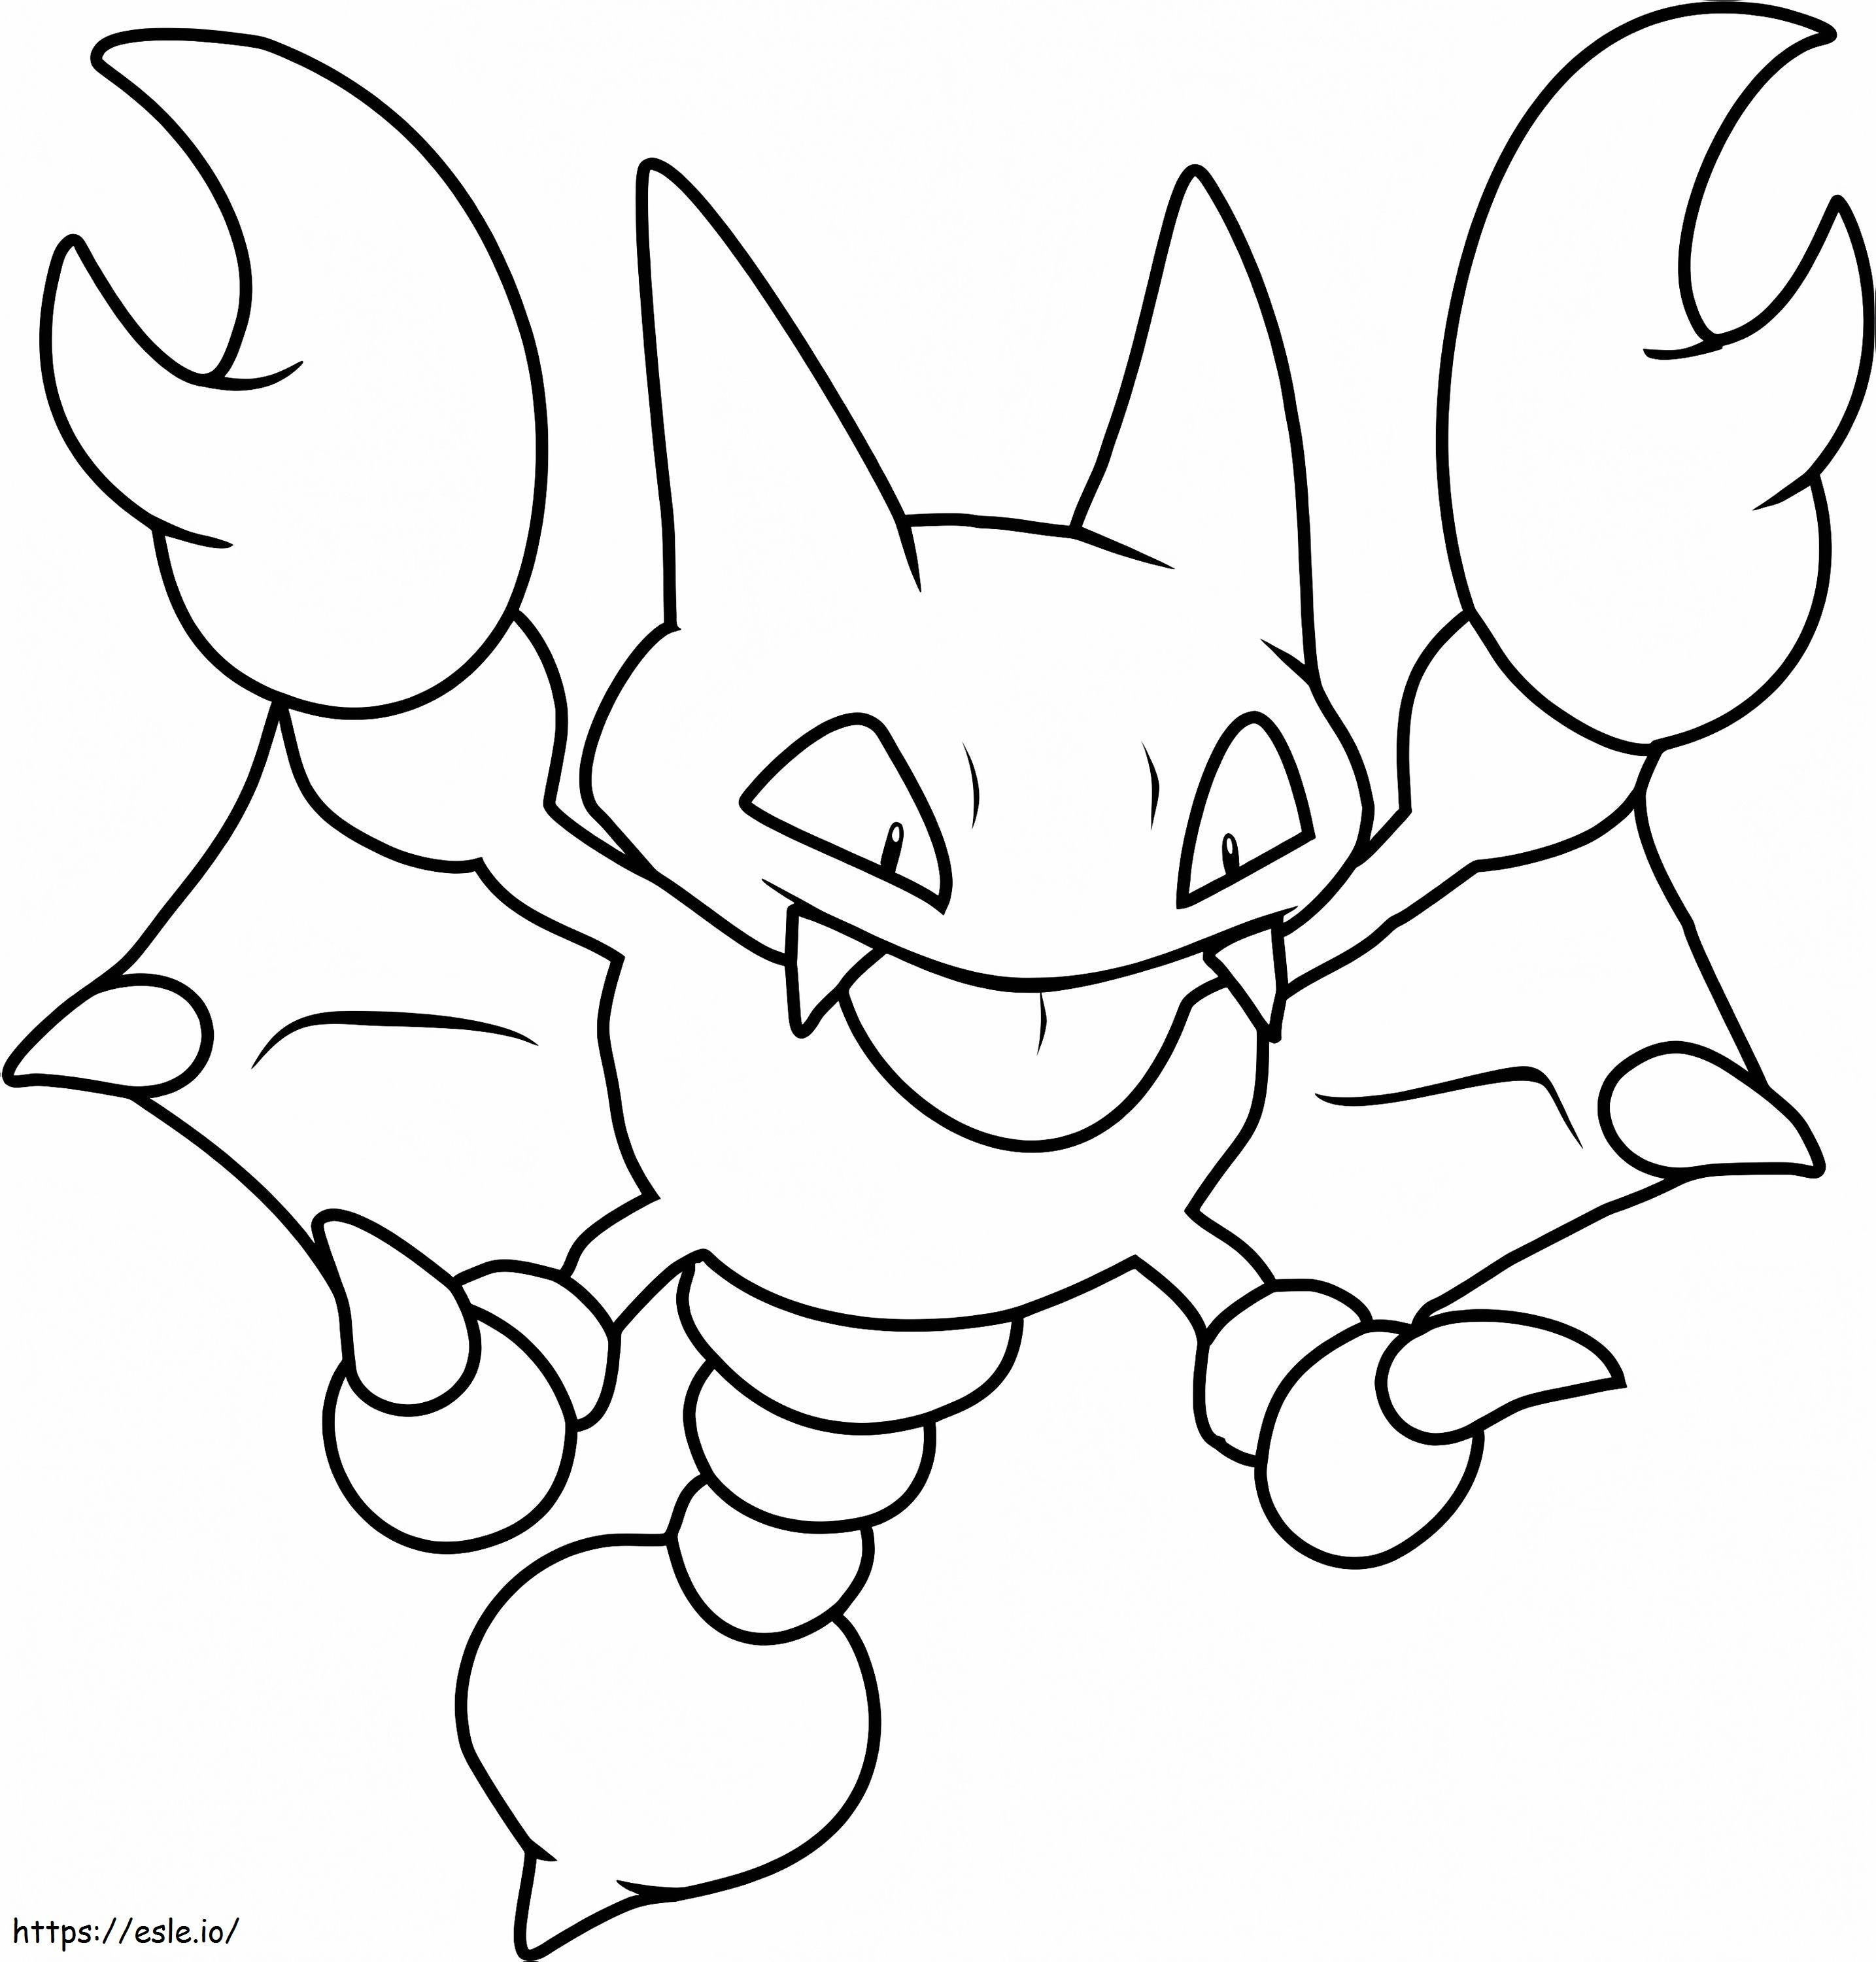 Gligar Pokemon coloring page